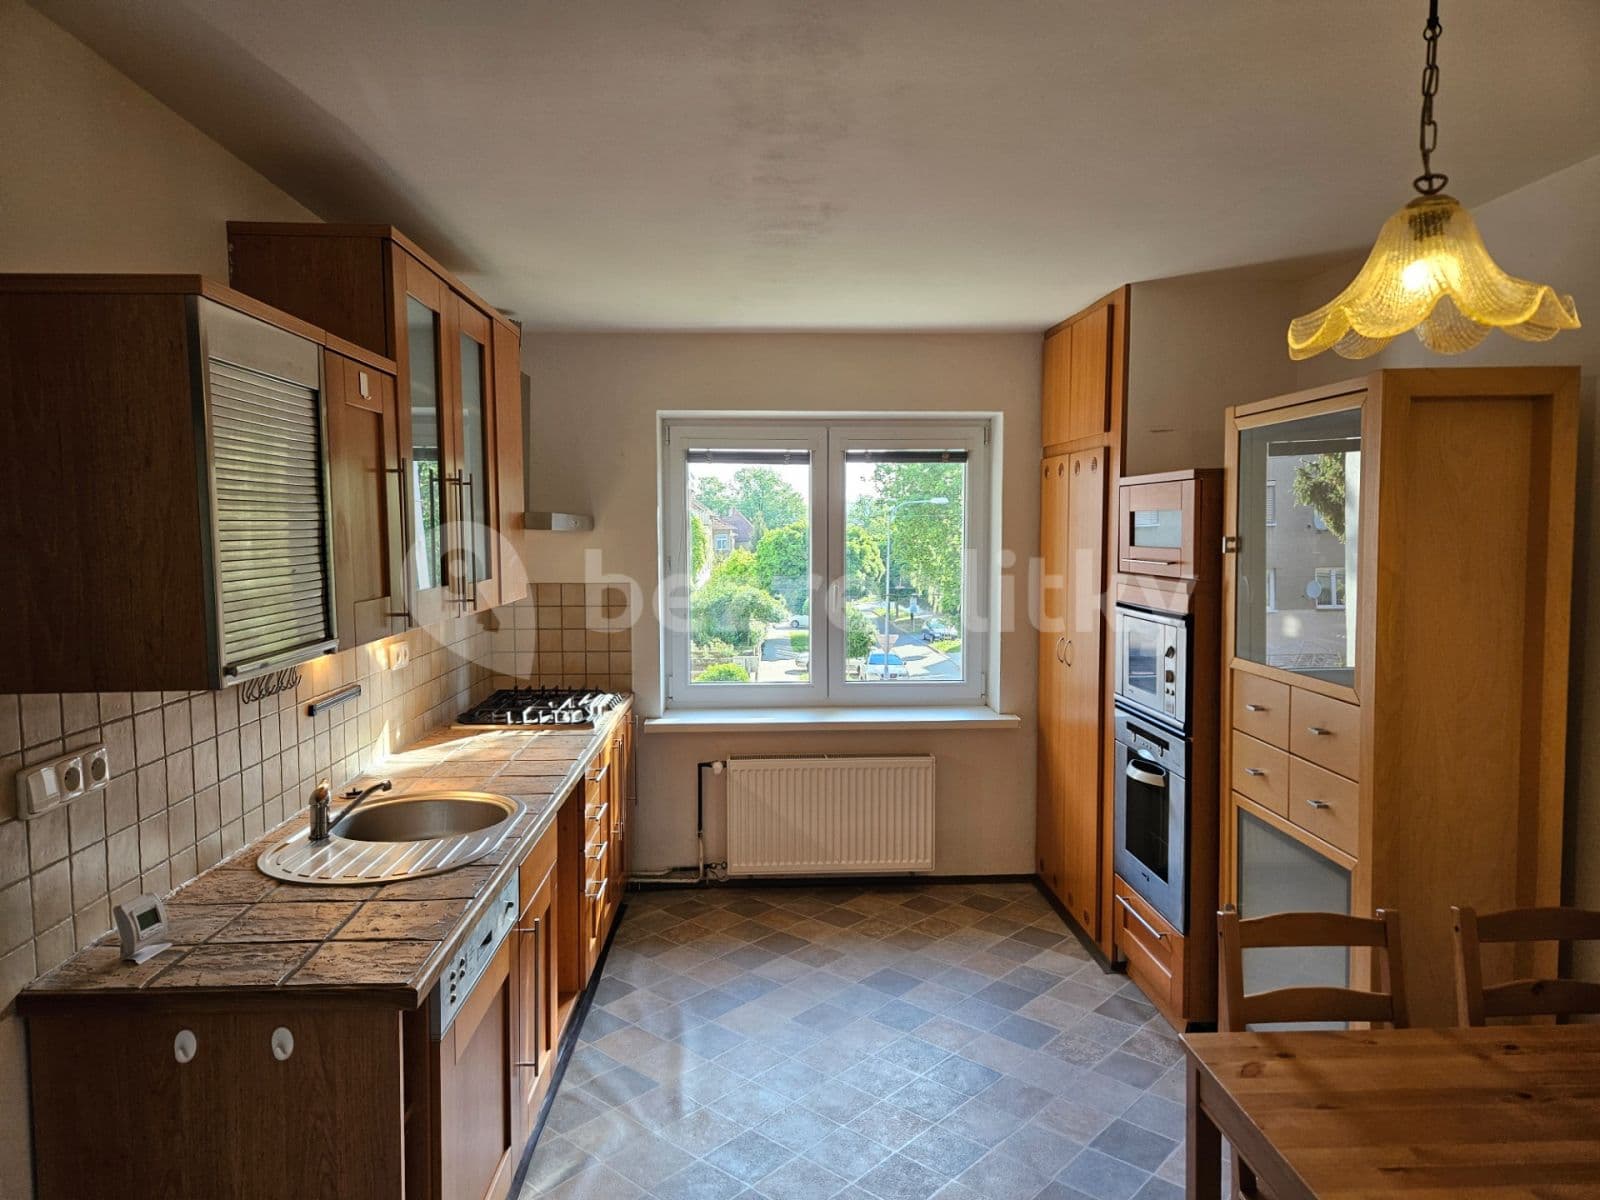 1 bedroom with open-plan kitchen flat to rent, 55 m², Purkyňova, Brno, Jihomoravský Region